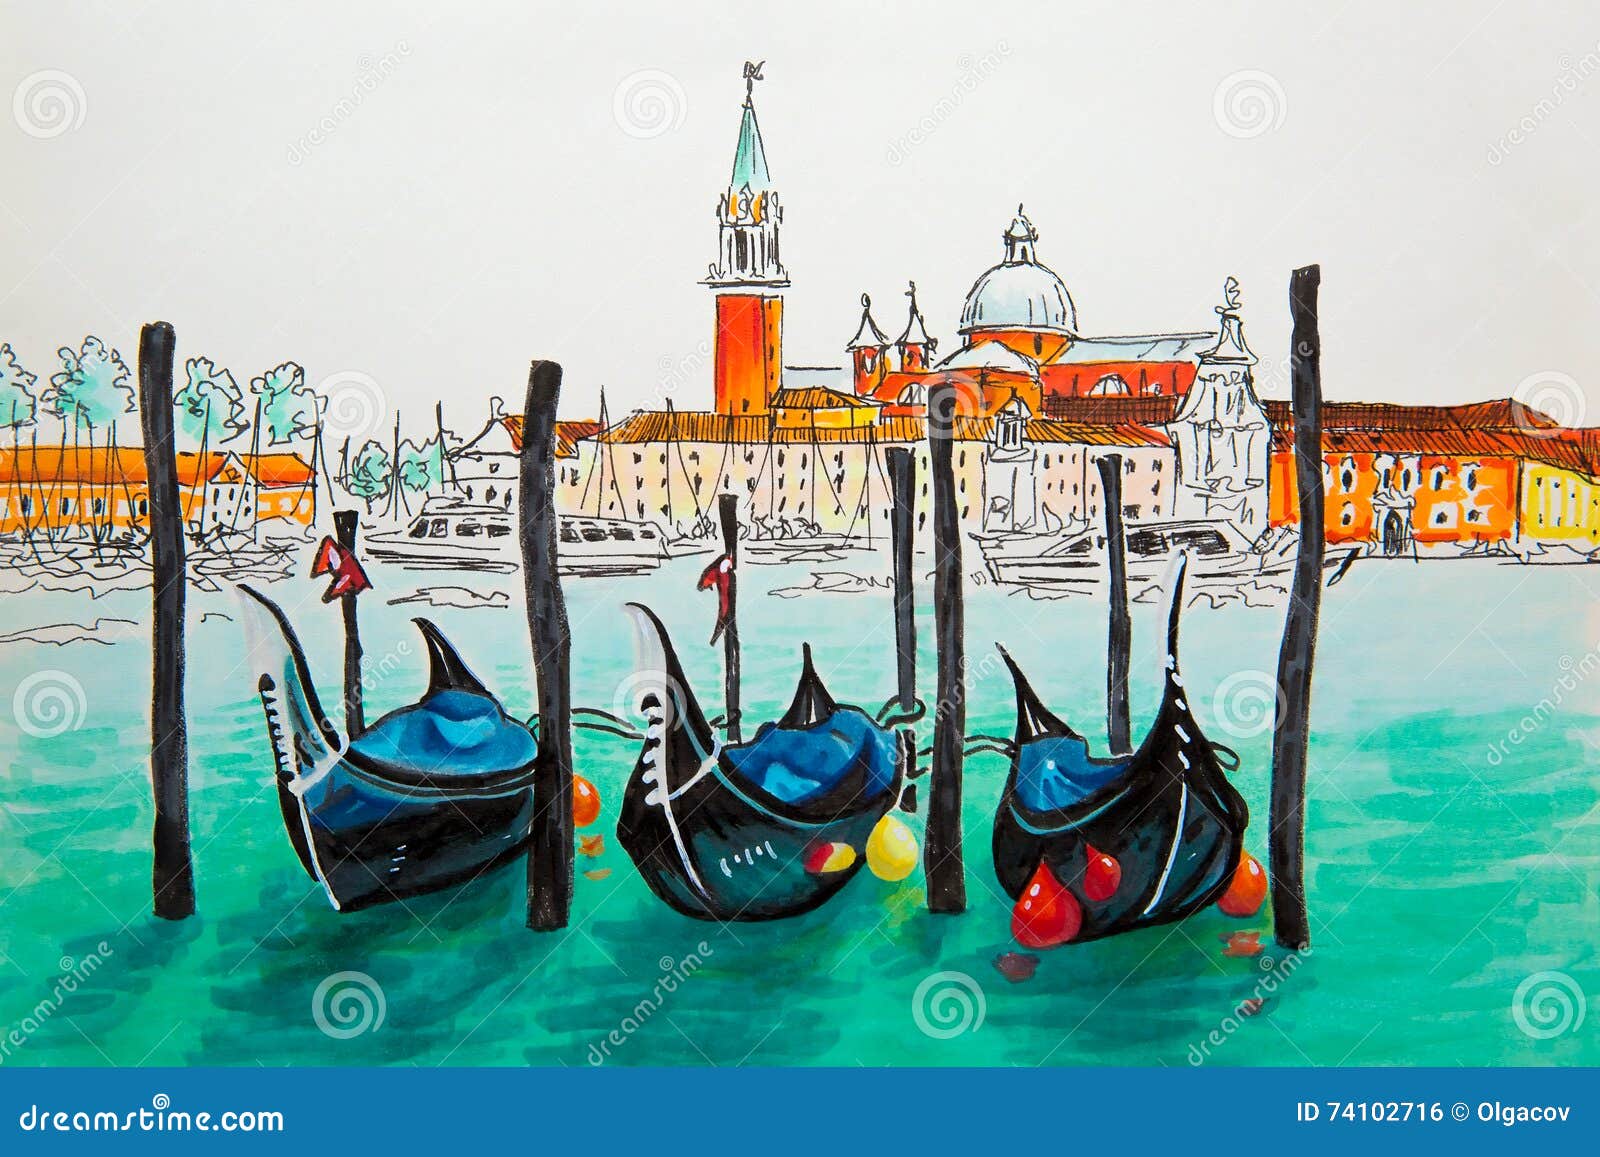 gondolas in venice lagoon, italia